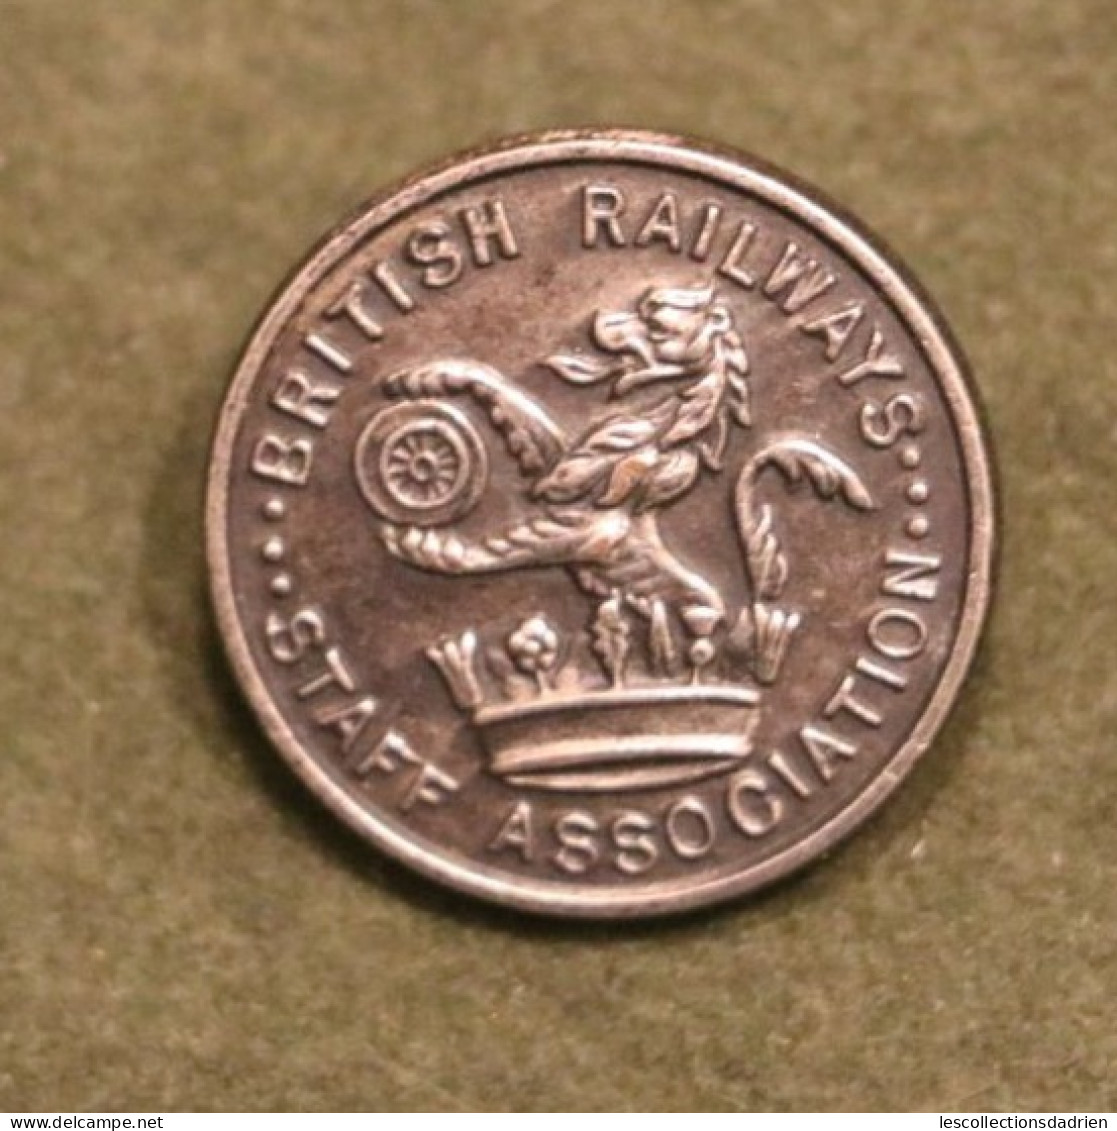 Insigne Broche British Railways Staff Association - Badge Pin Brooch - Train - Spoorweg